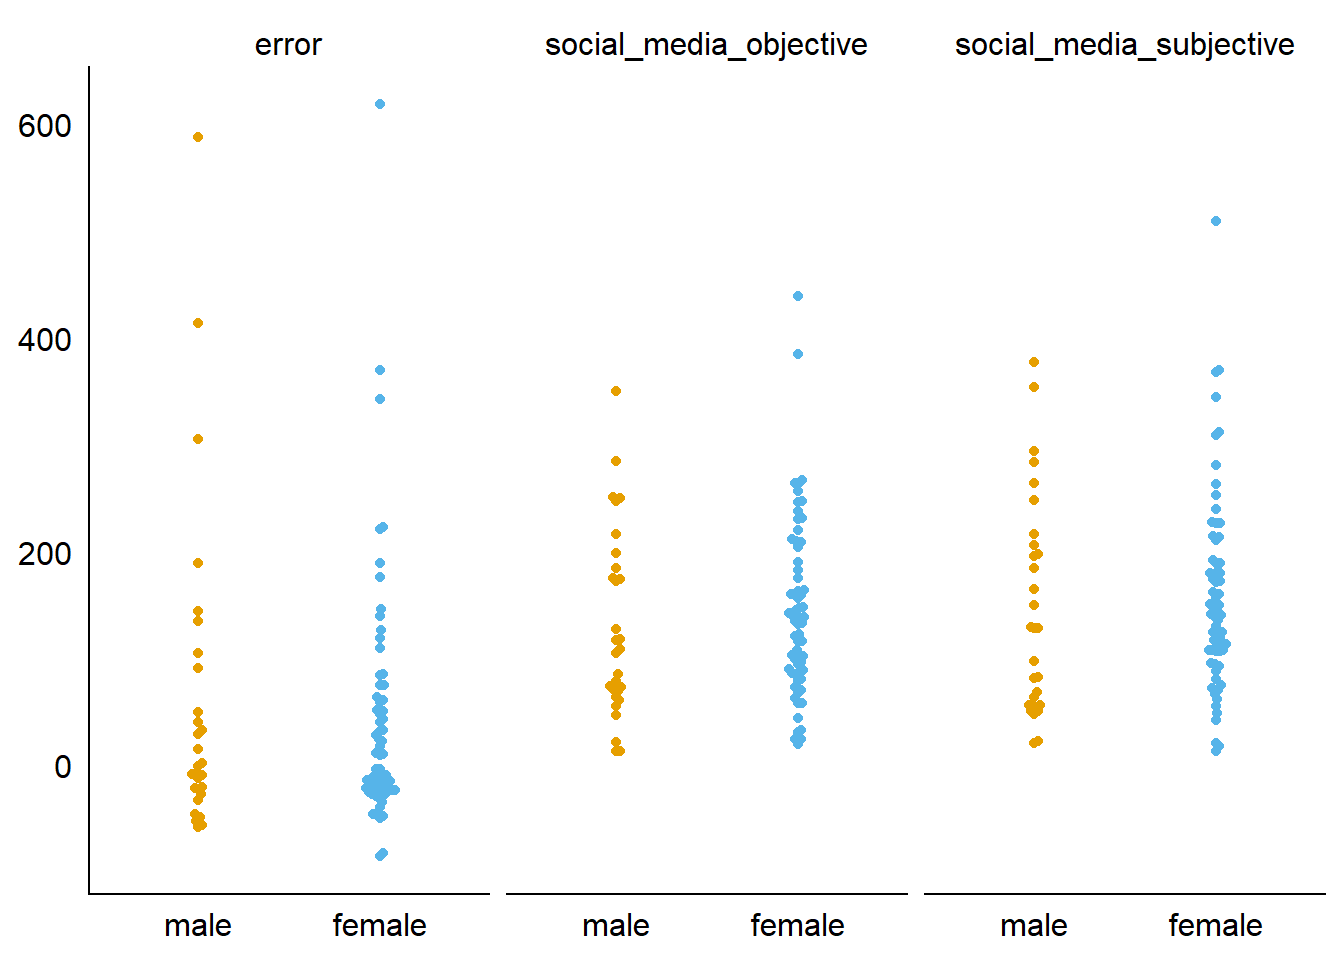 Comparison of social media variables between gender